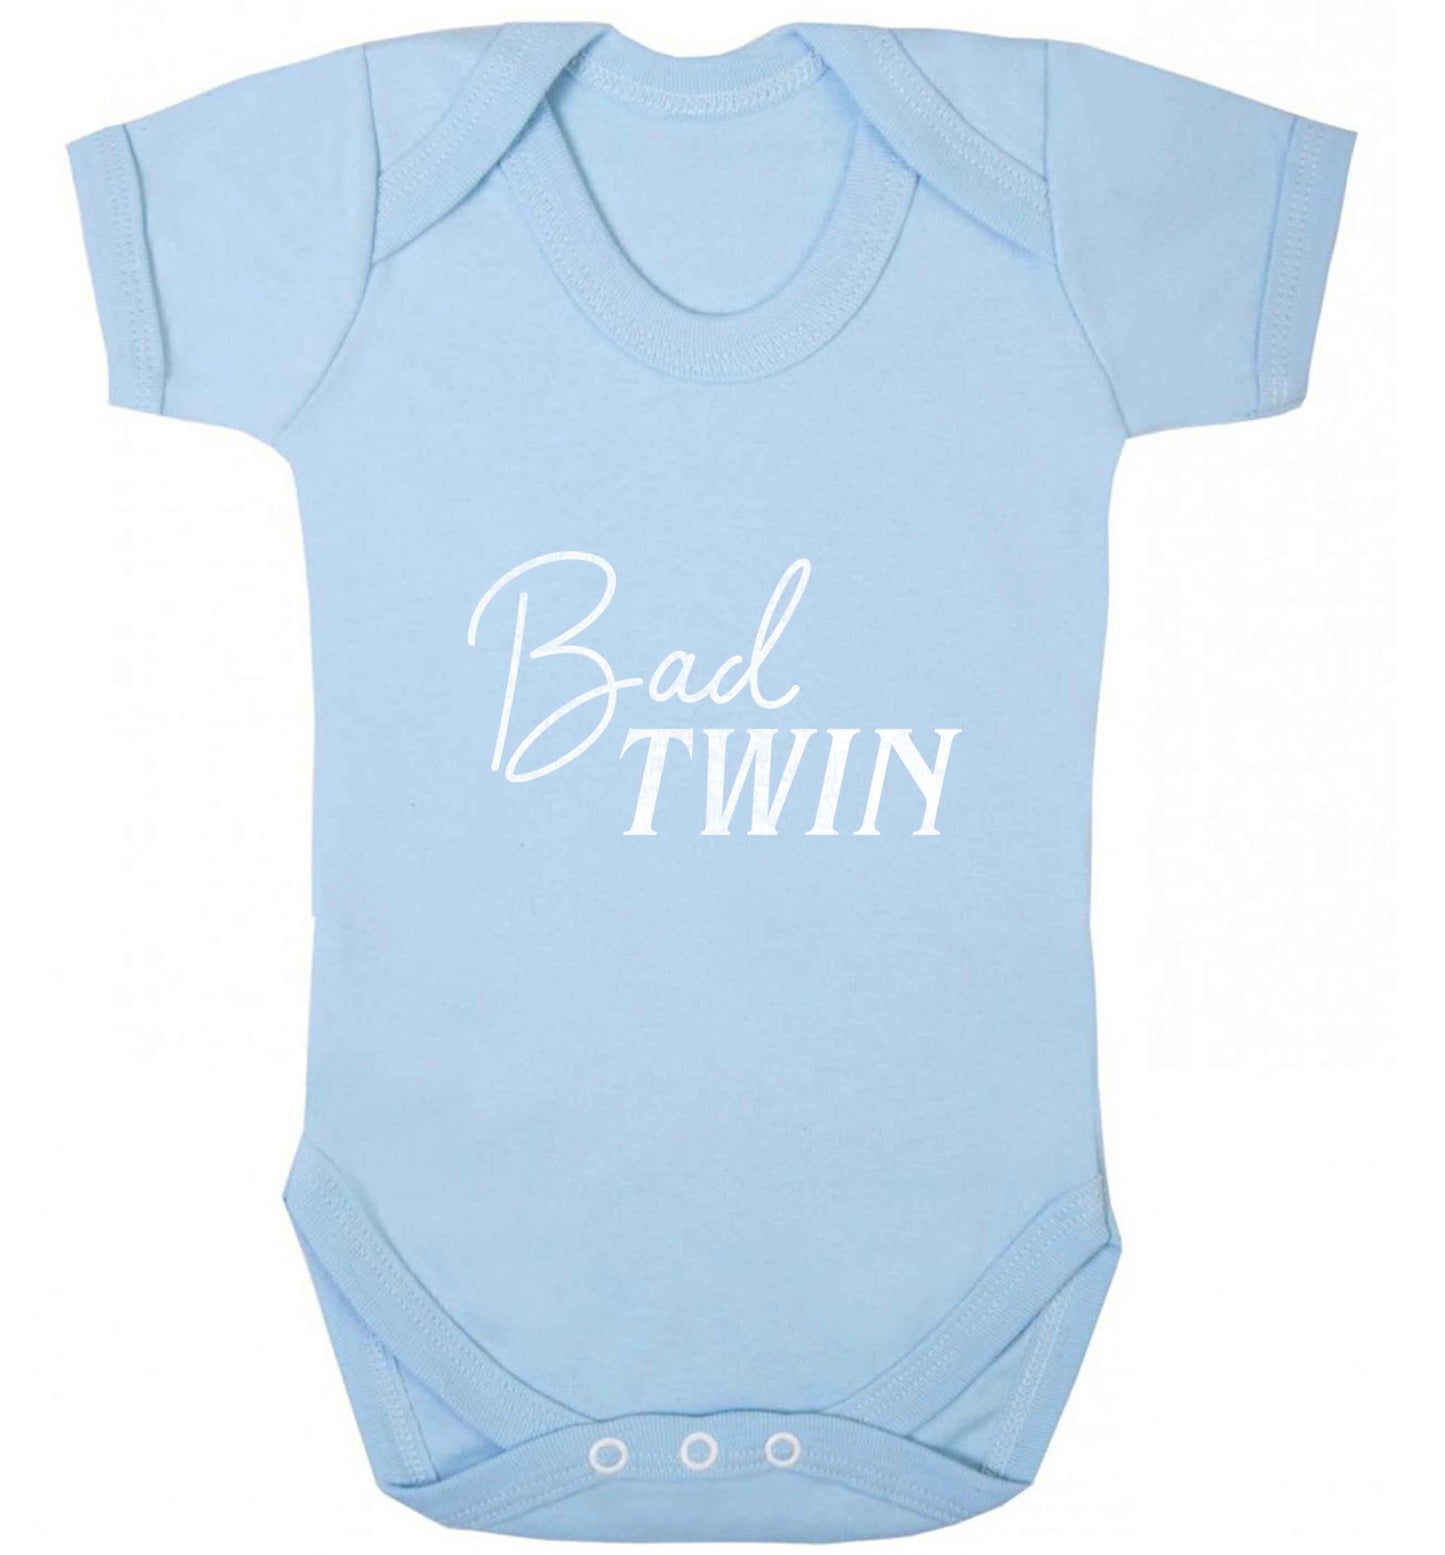 Bad twin baby vest pale blue 18-24 months